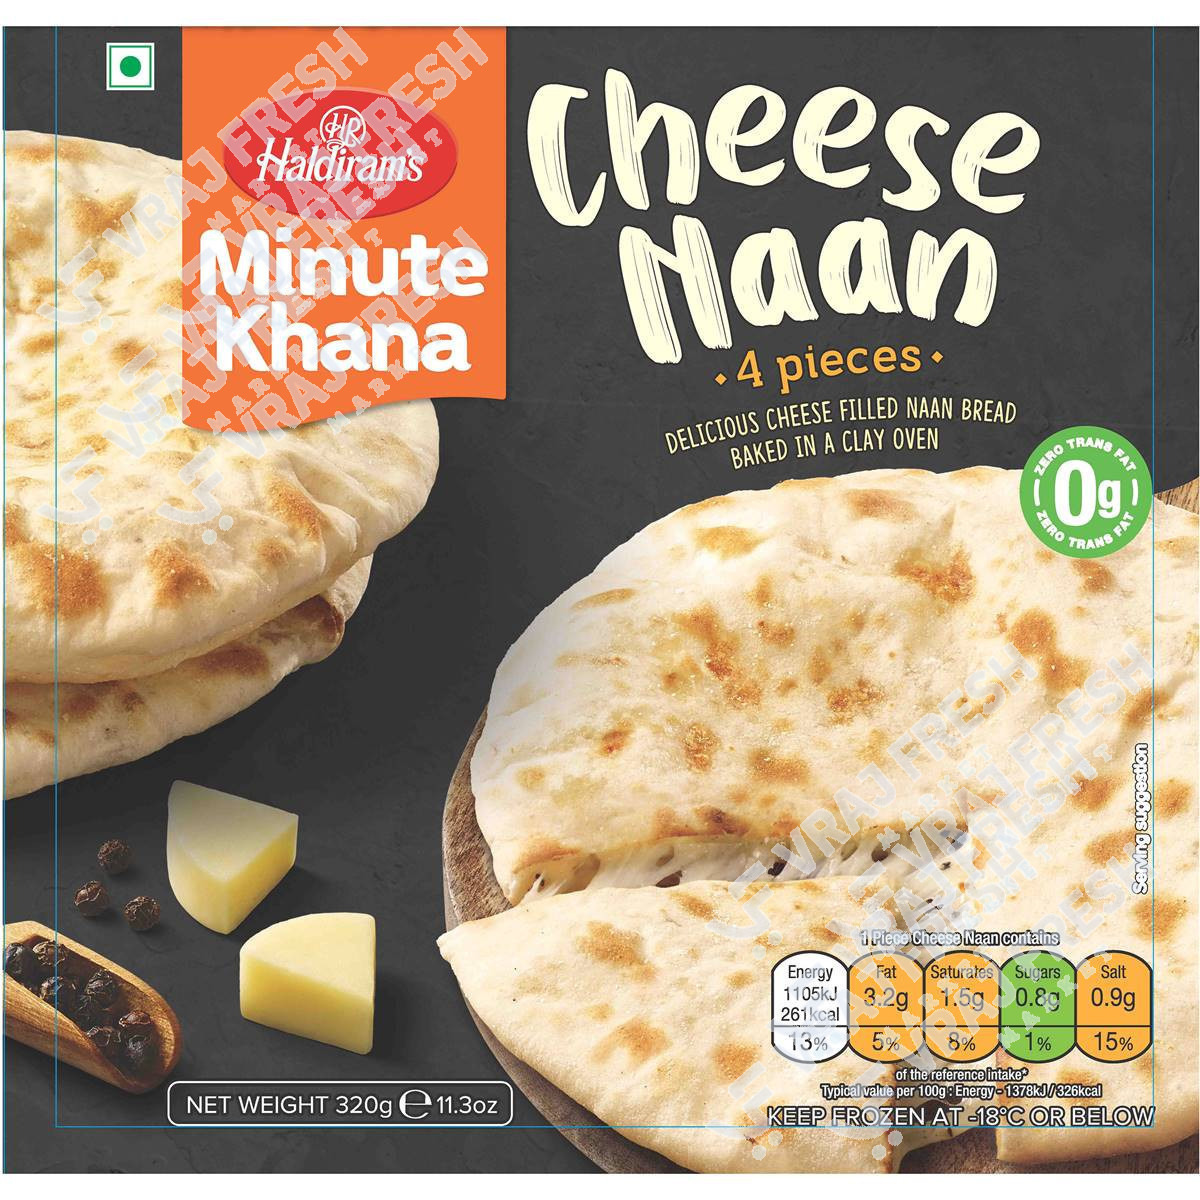 Haldiram's Minute Khana Cheese Naan 4 Pc - 320 Gm (11.3 Oz)